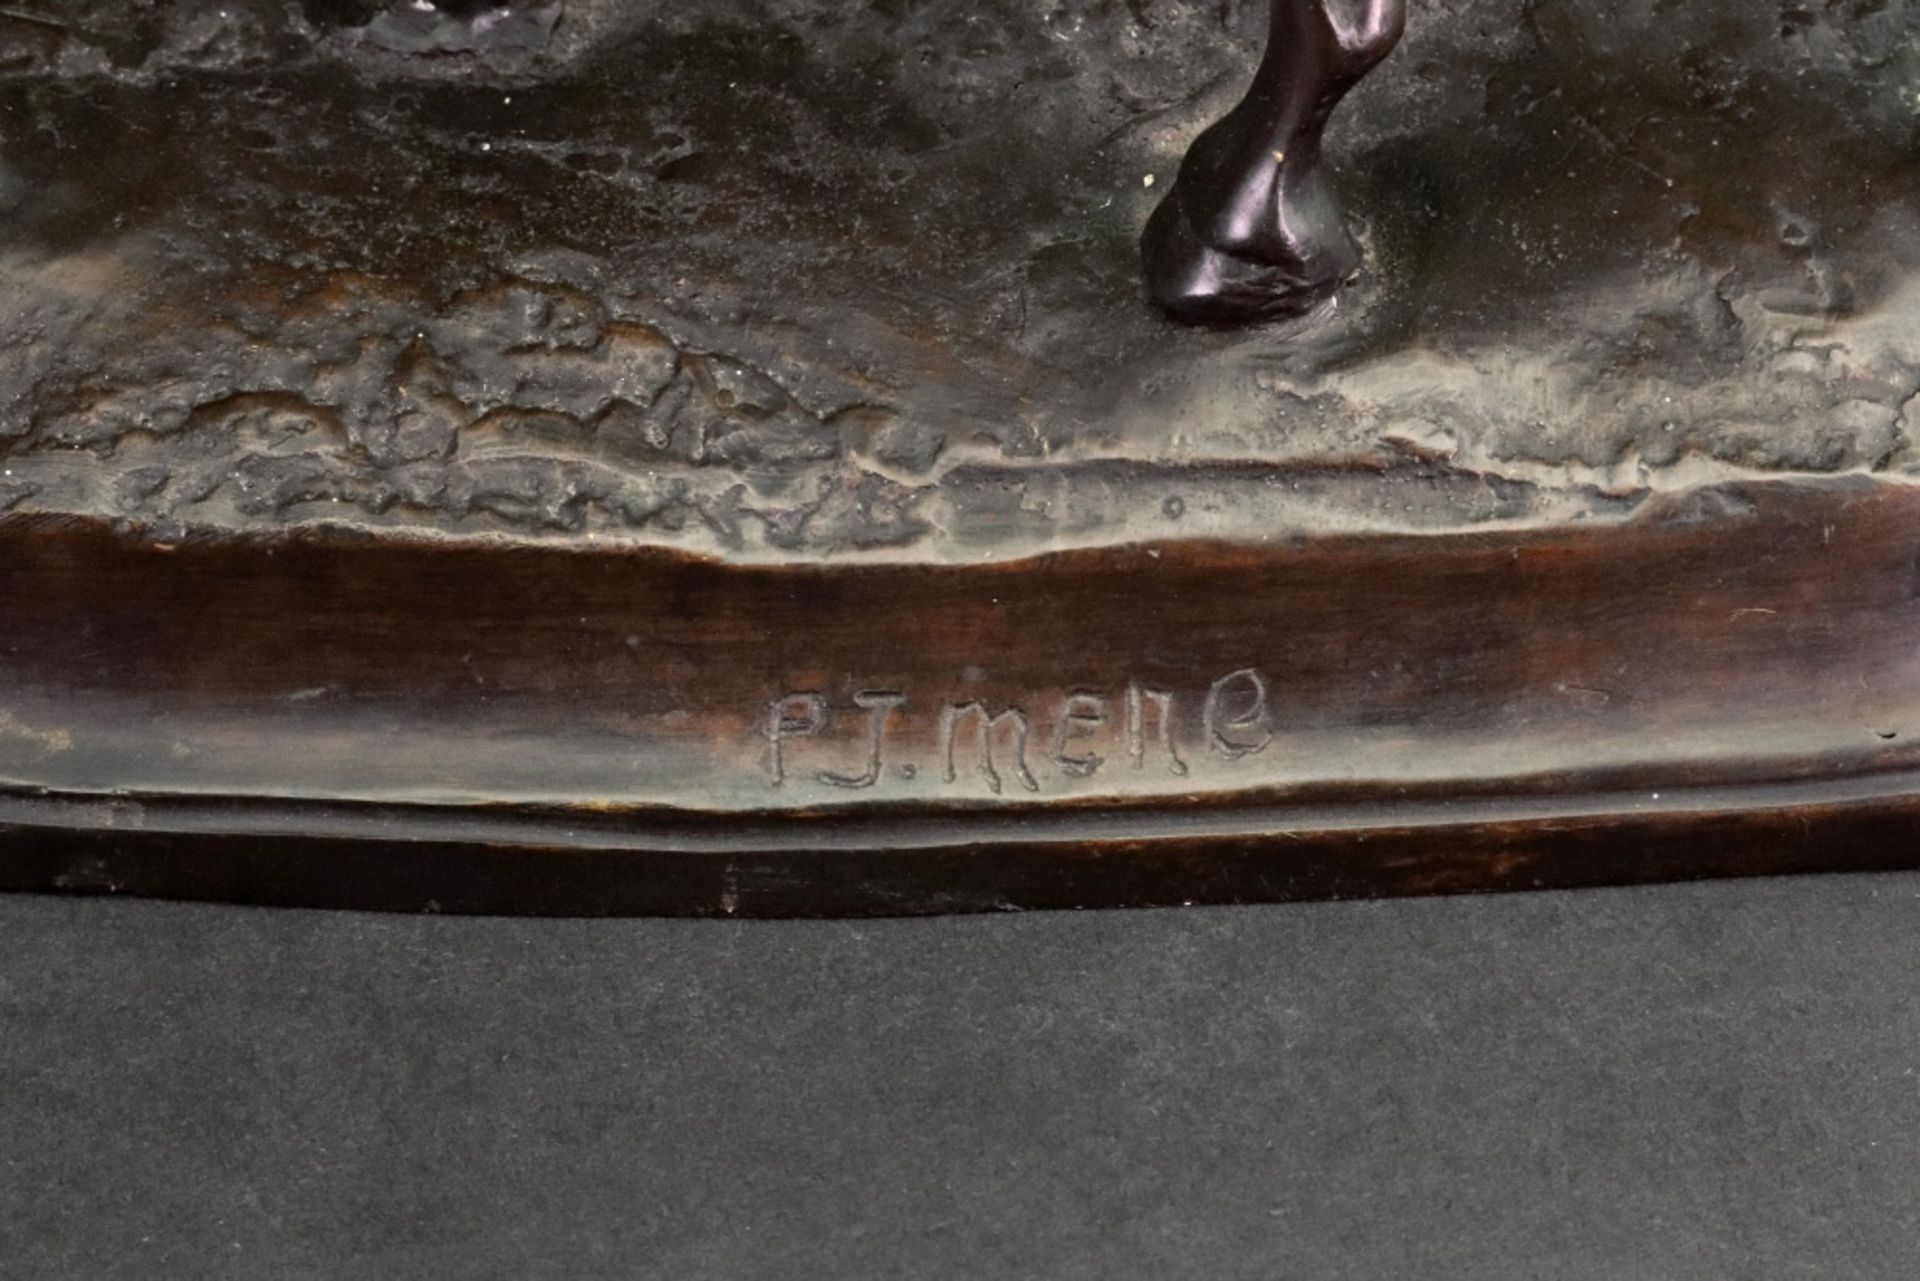 After Pierre-Jules Mene, Two horses, bears signature, 'P J Mene', bronze, 49cm wide x 29cm high. - Image 2 of 3